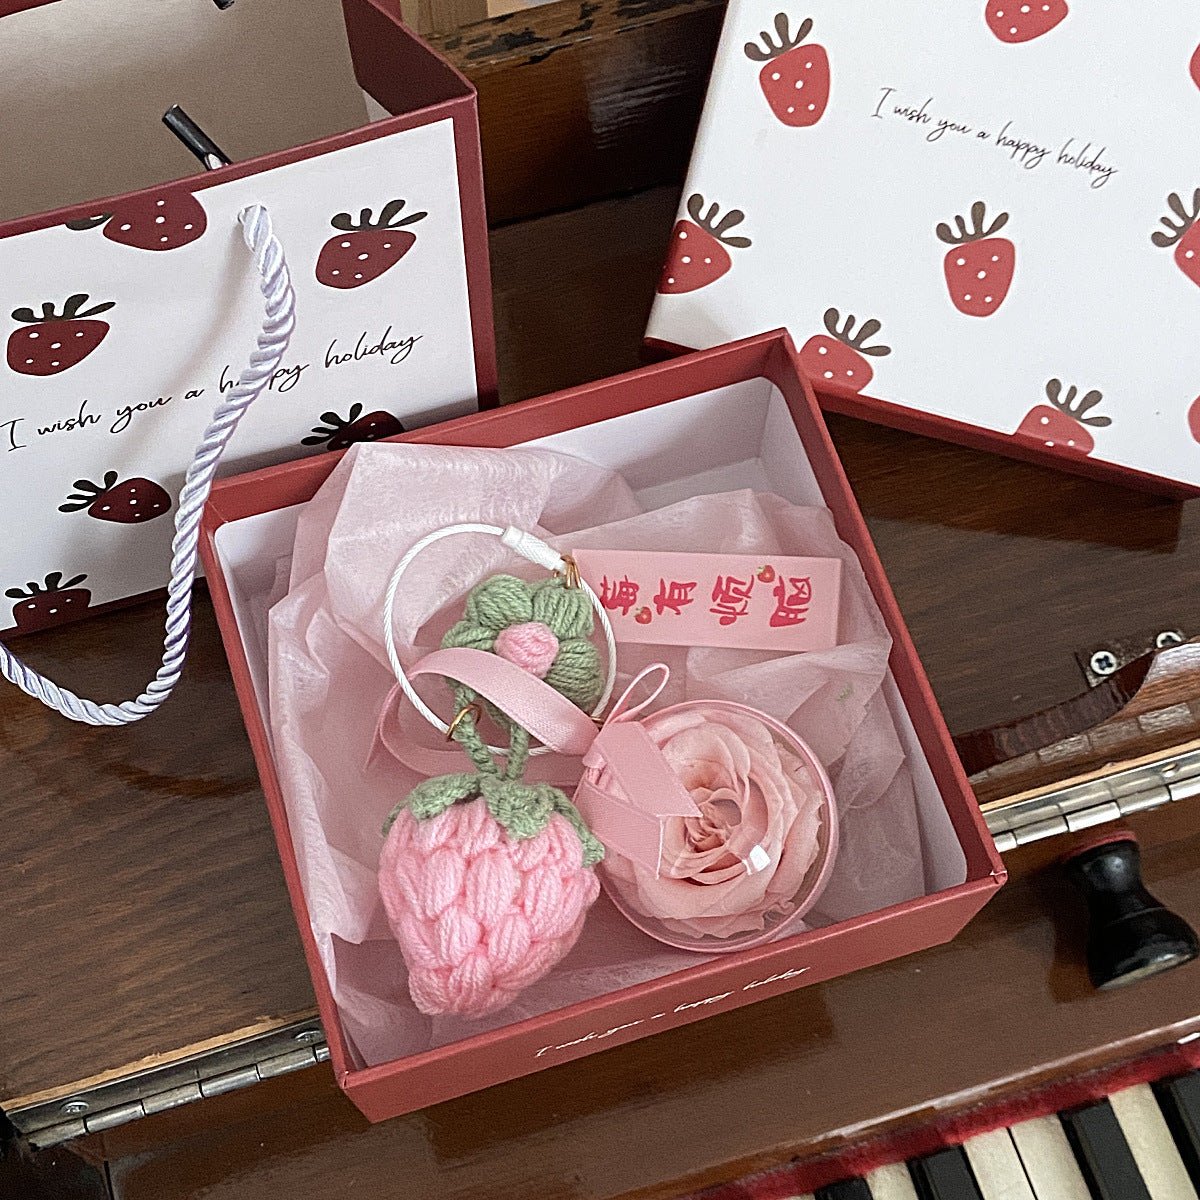 Crochet Doll Strawberry Eternal Flower Keychain - TOY-ACC-19102 - Yiwuhuazhen - 42shops